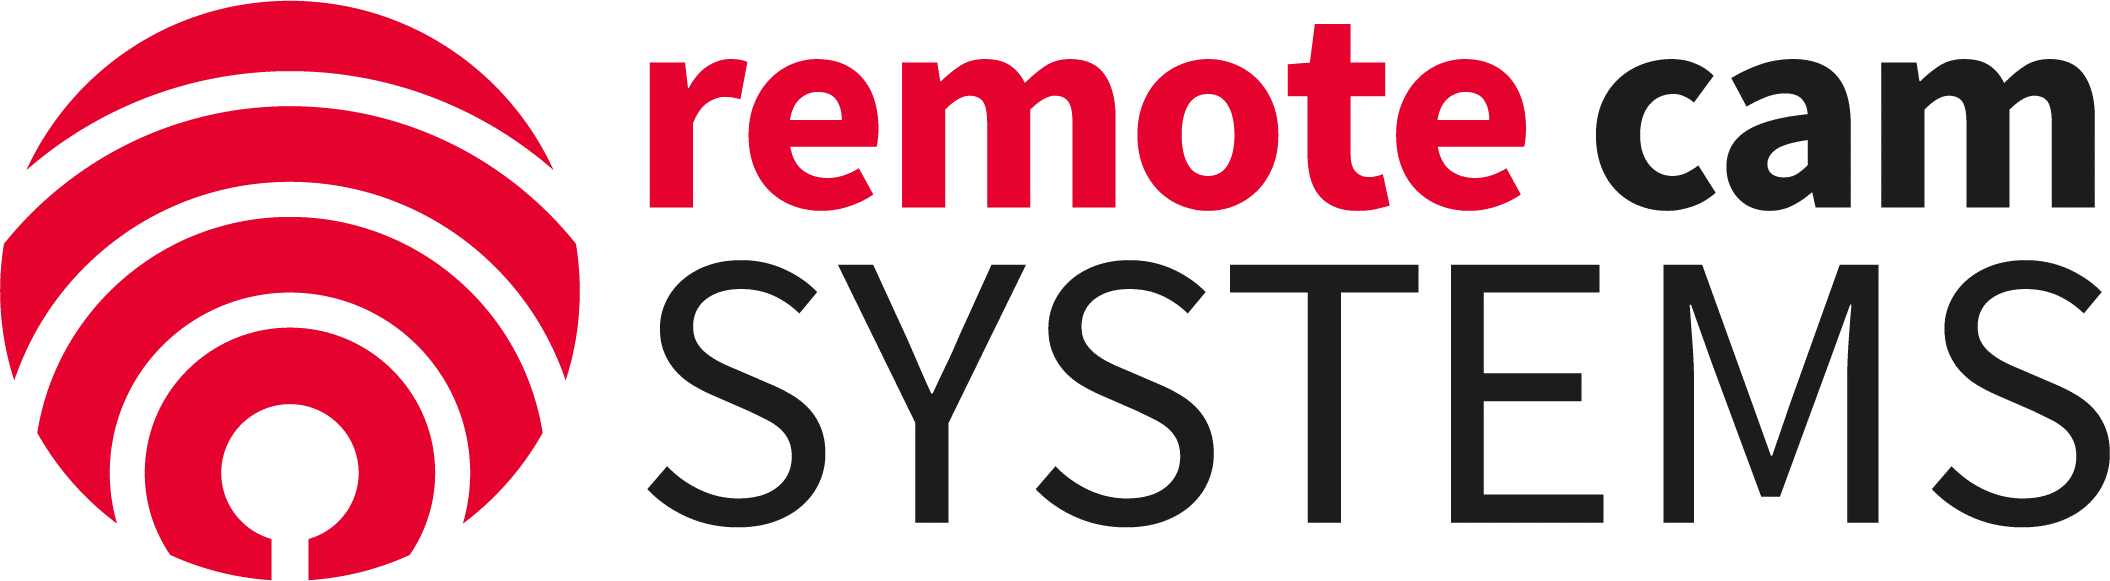 RemoteCamSystems_logo